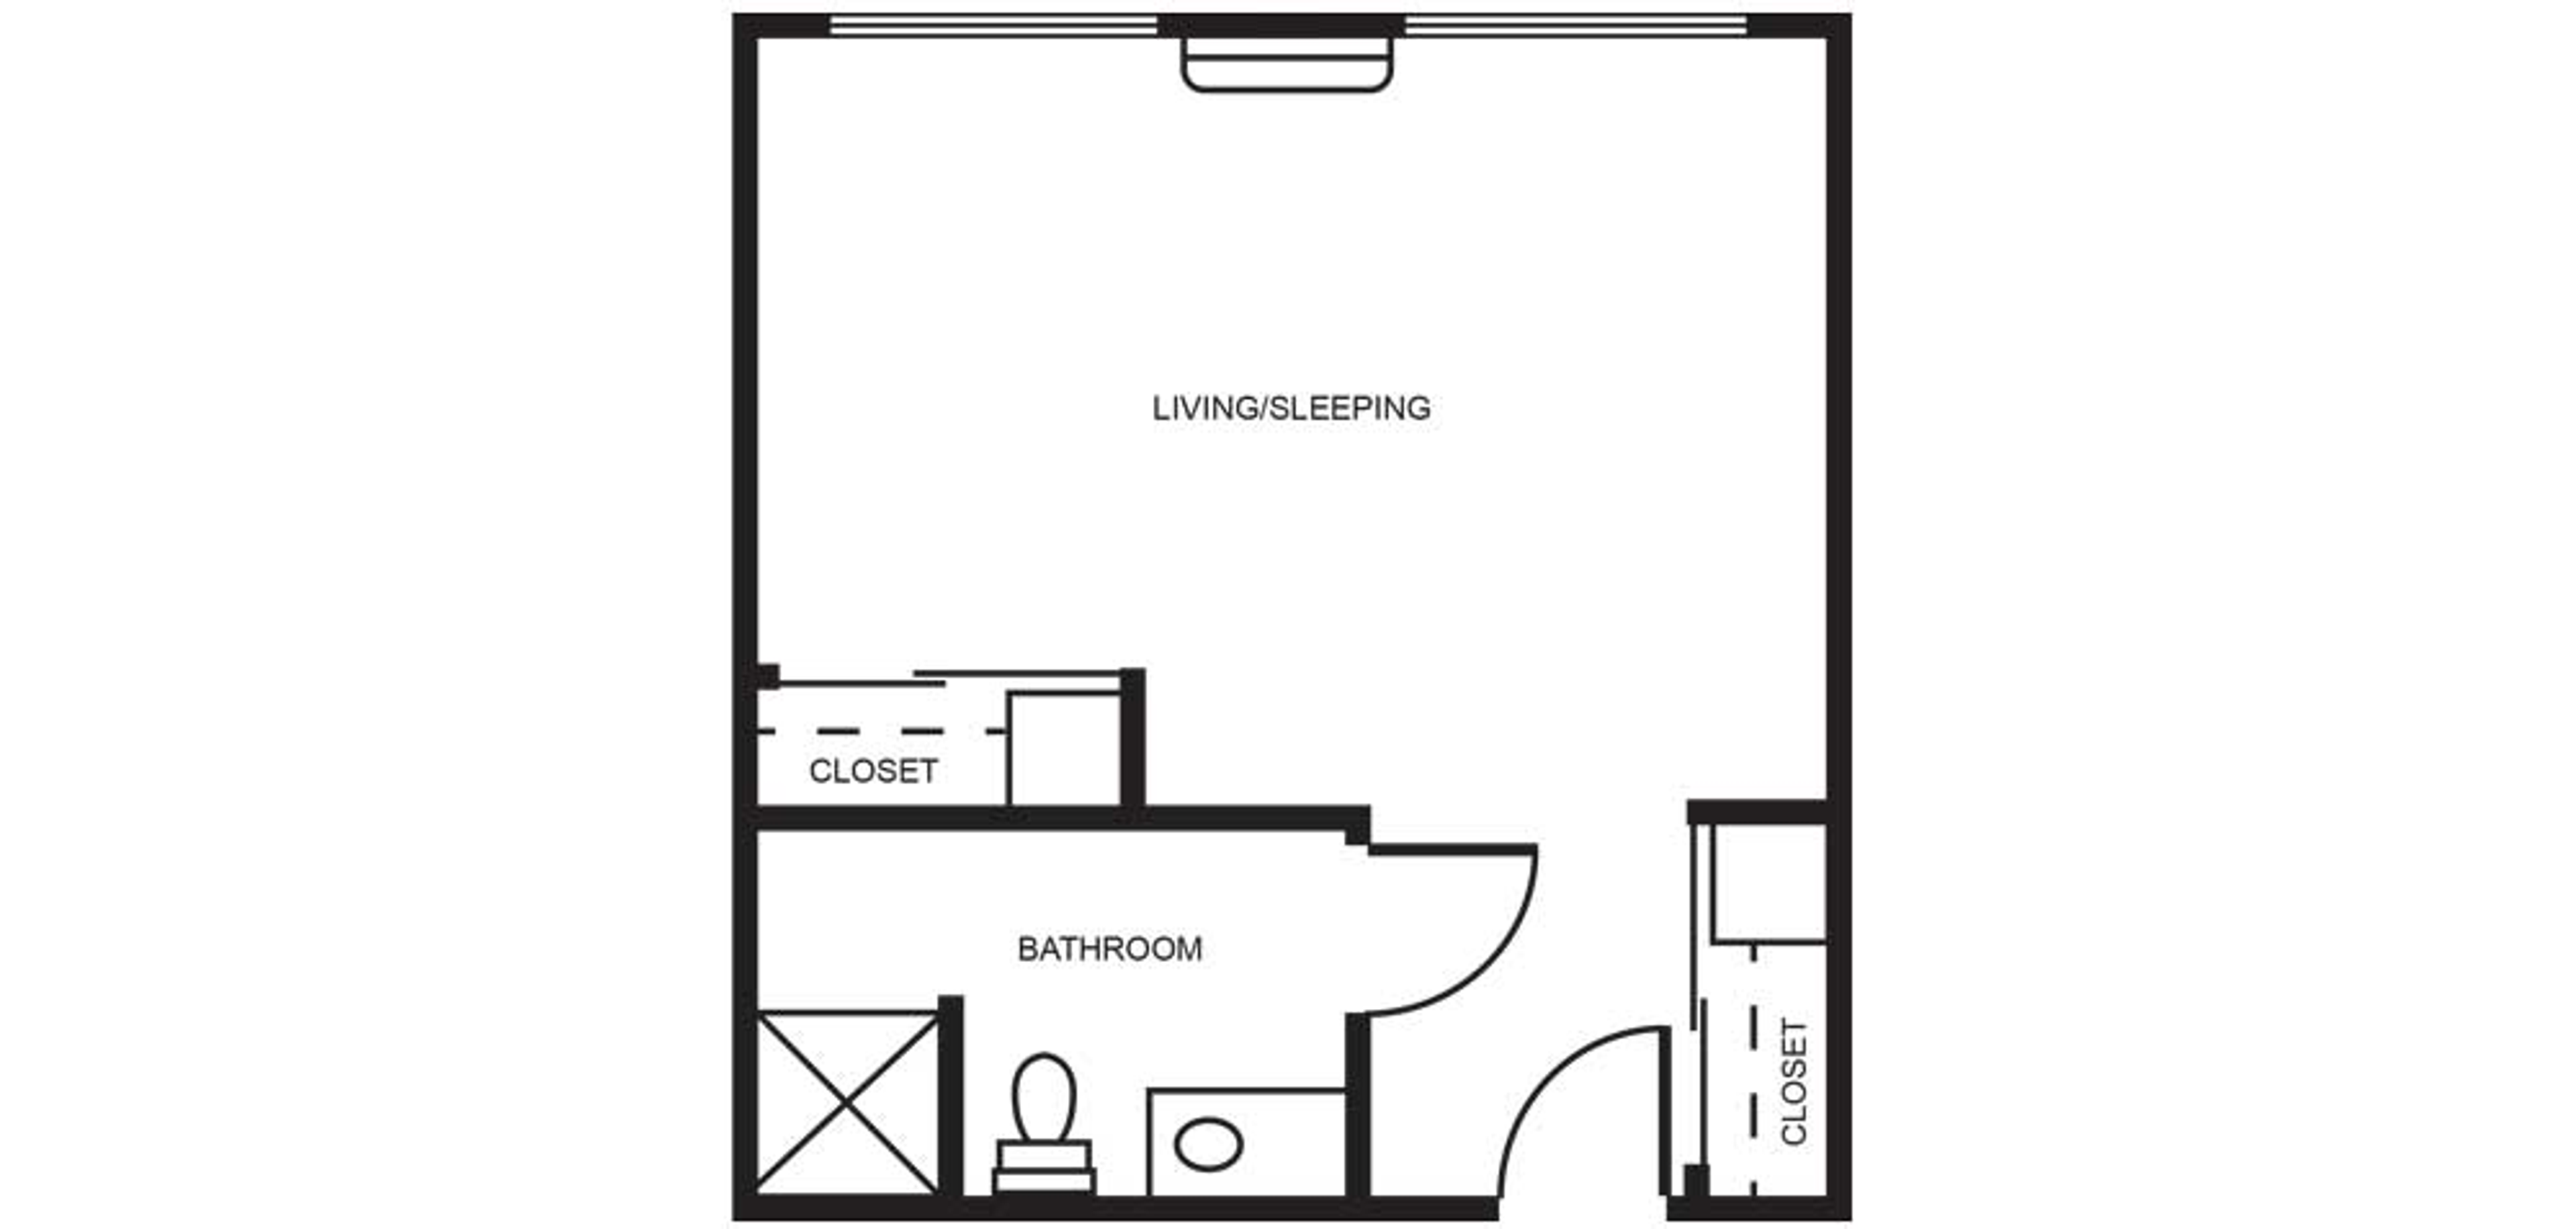 Floorplan - Glen Oaks - Shared suite